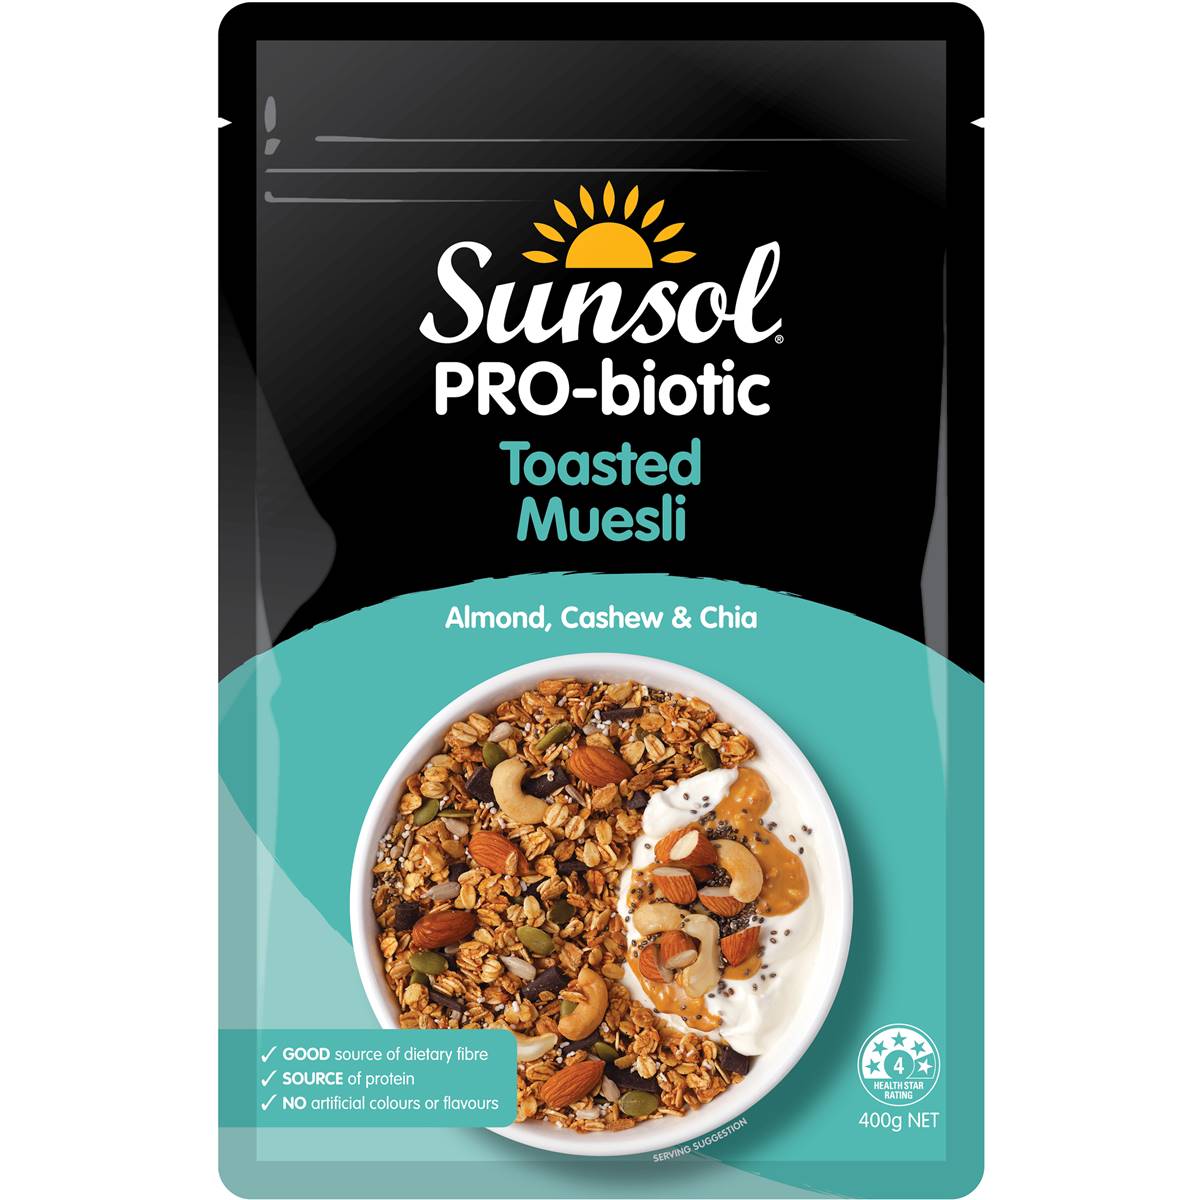 Calories in Sunsol Pro-biotic Almond Cashew & Chia Toasted Muesli